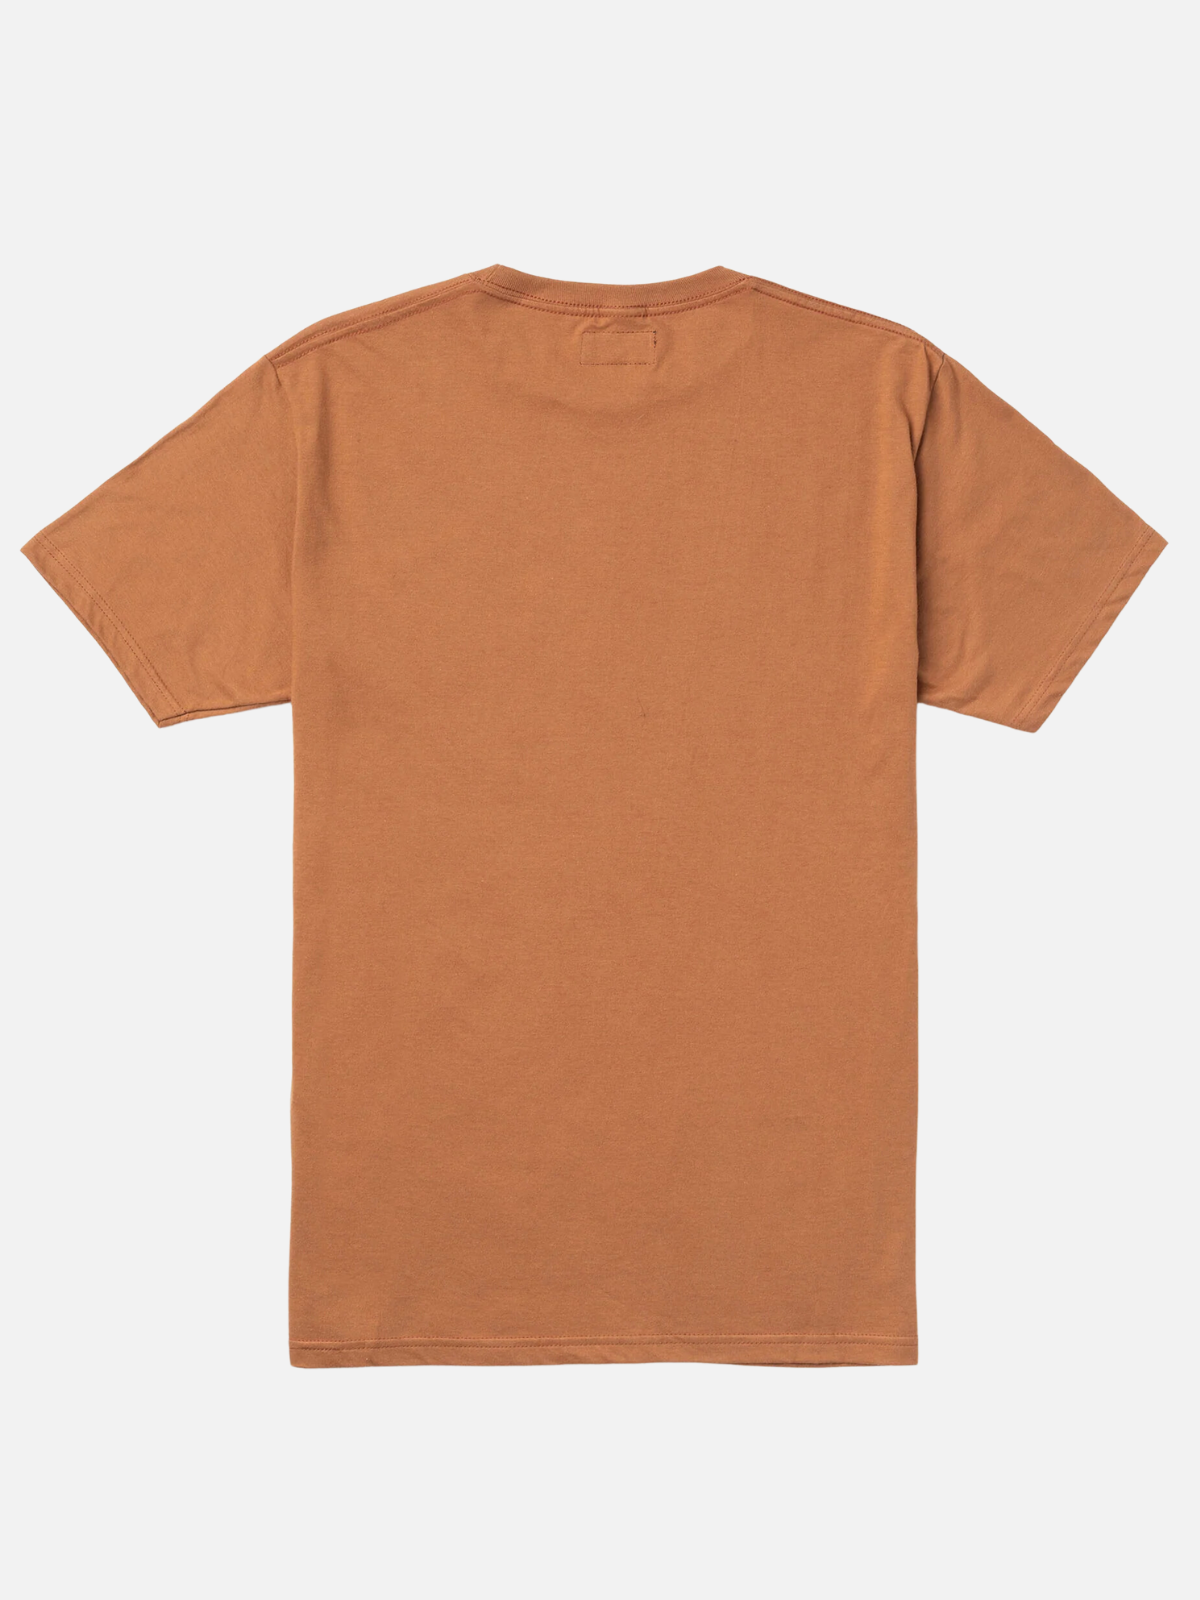 seager heritage tee brown tan red orange 100% cotton graphic t-shirt kempt athens ga georgia men's clothing store